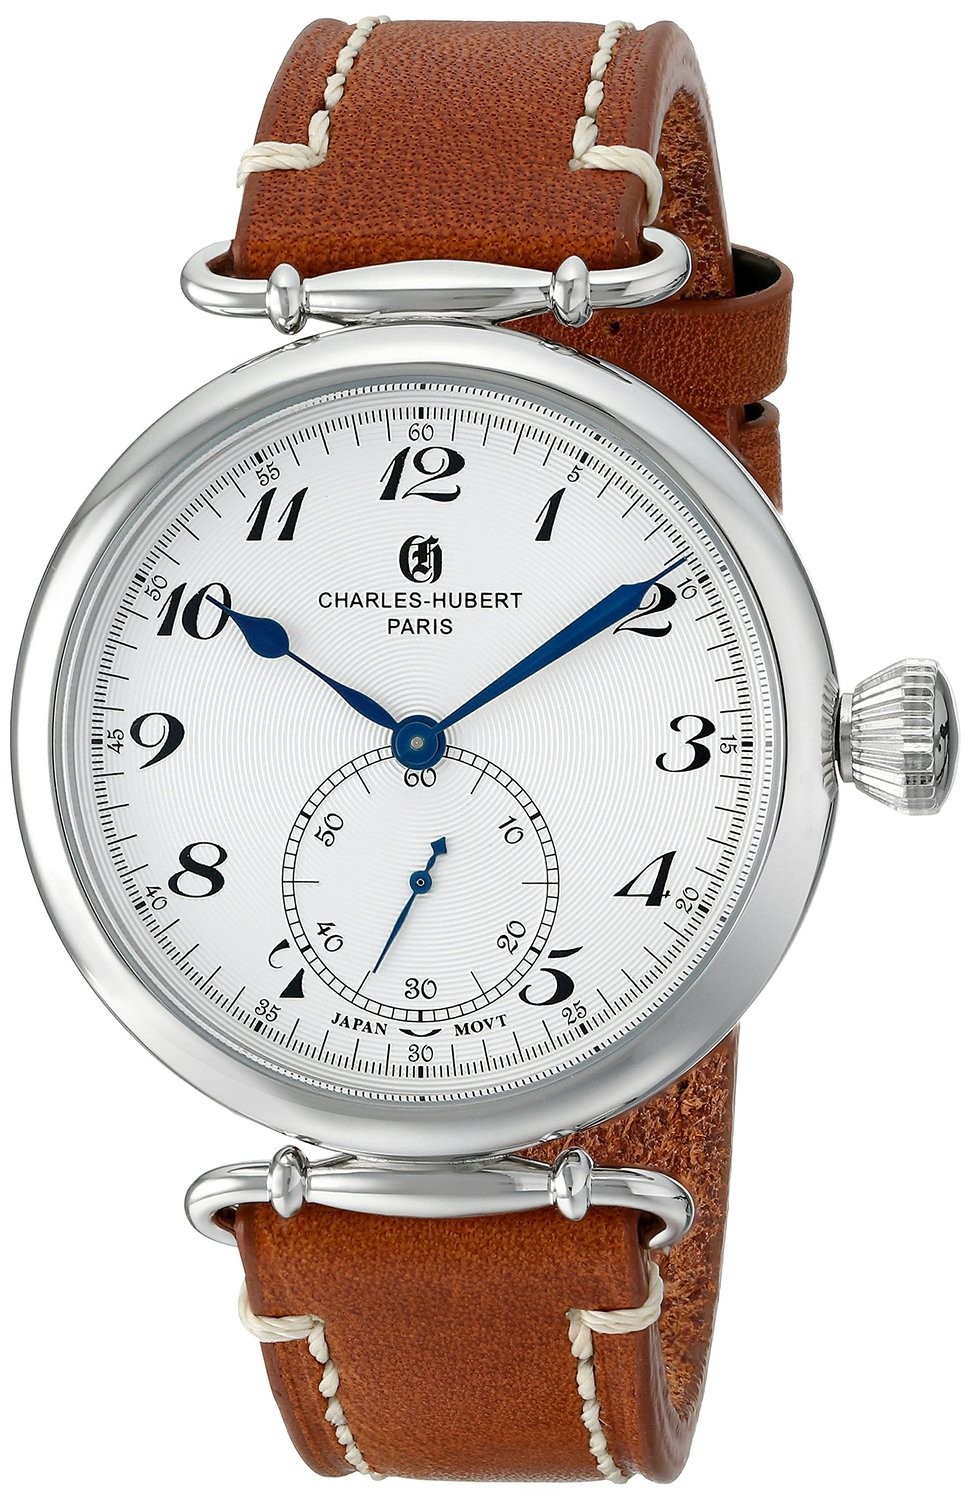 Charles-Hubert Paris Men's Stainless Steel Quartz Watch